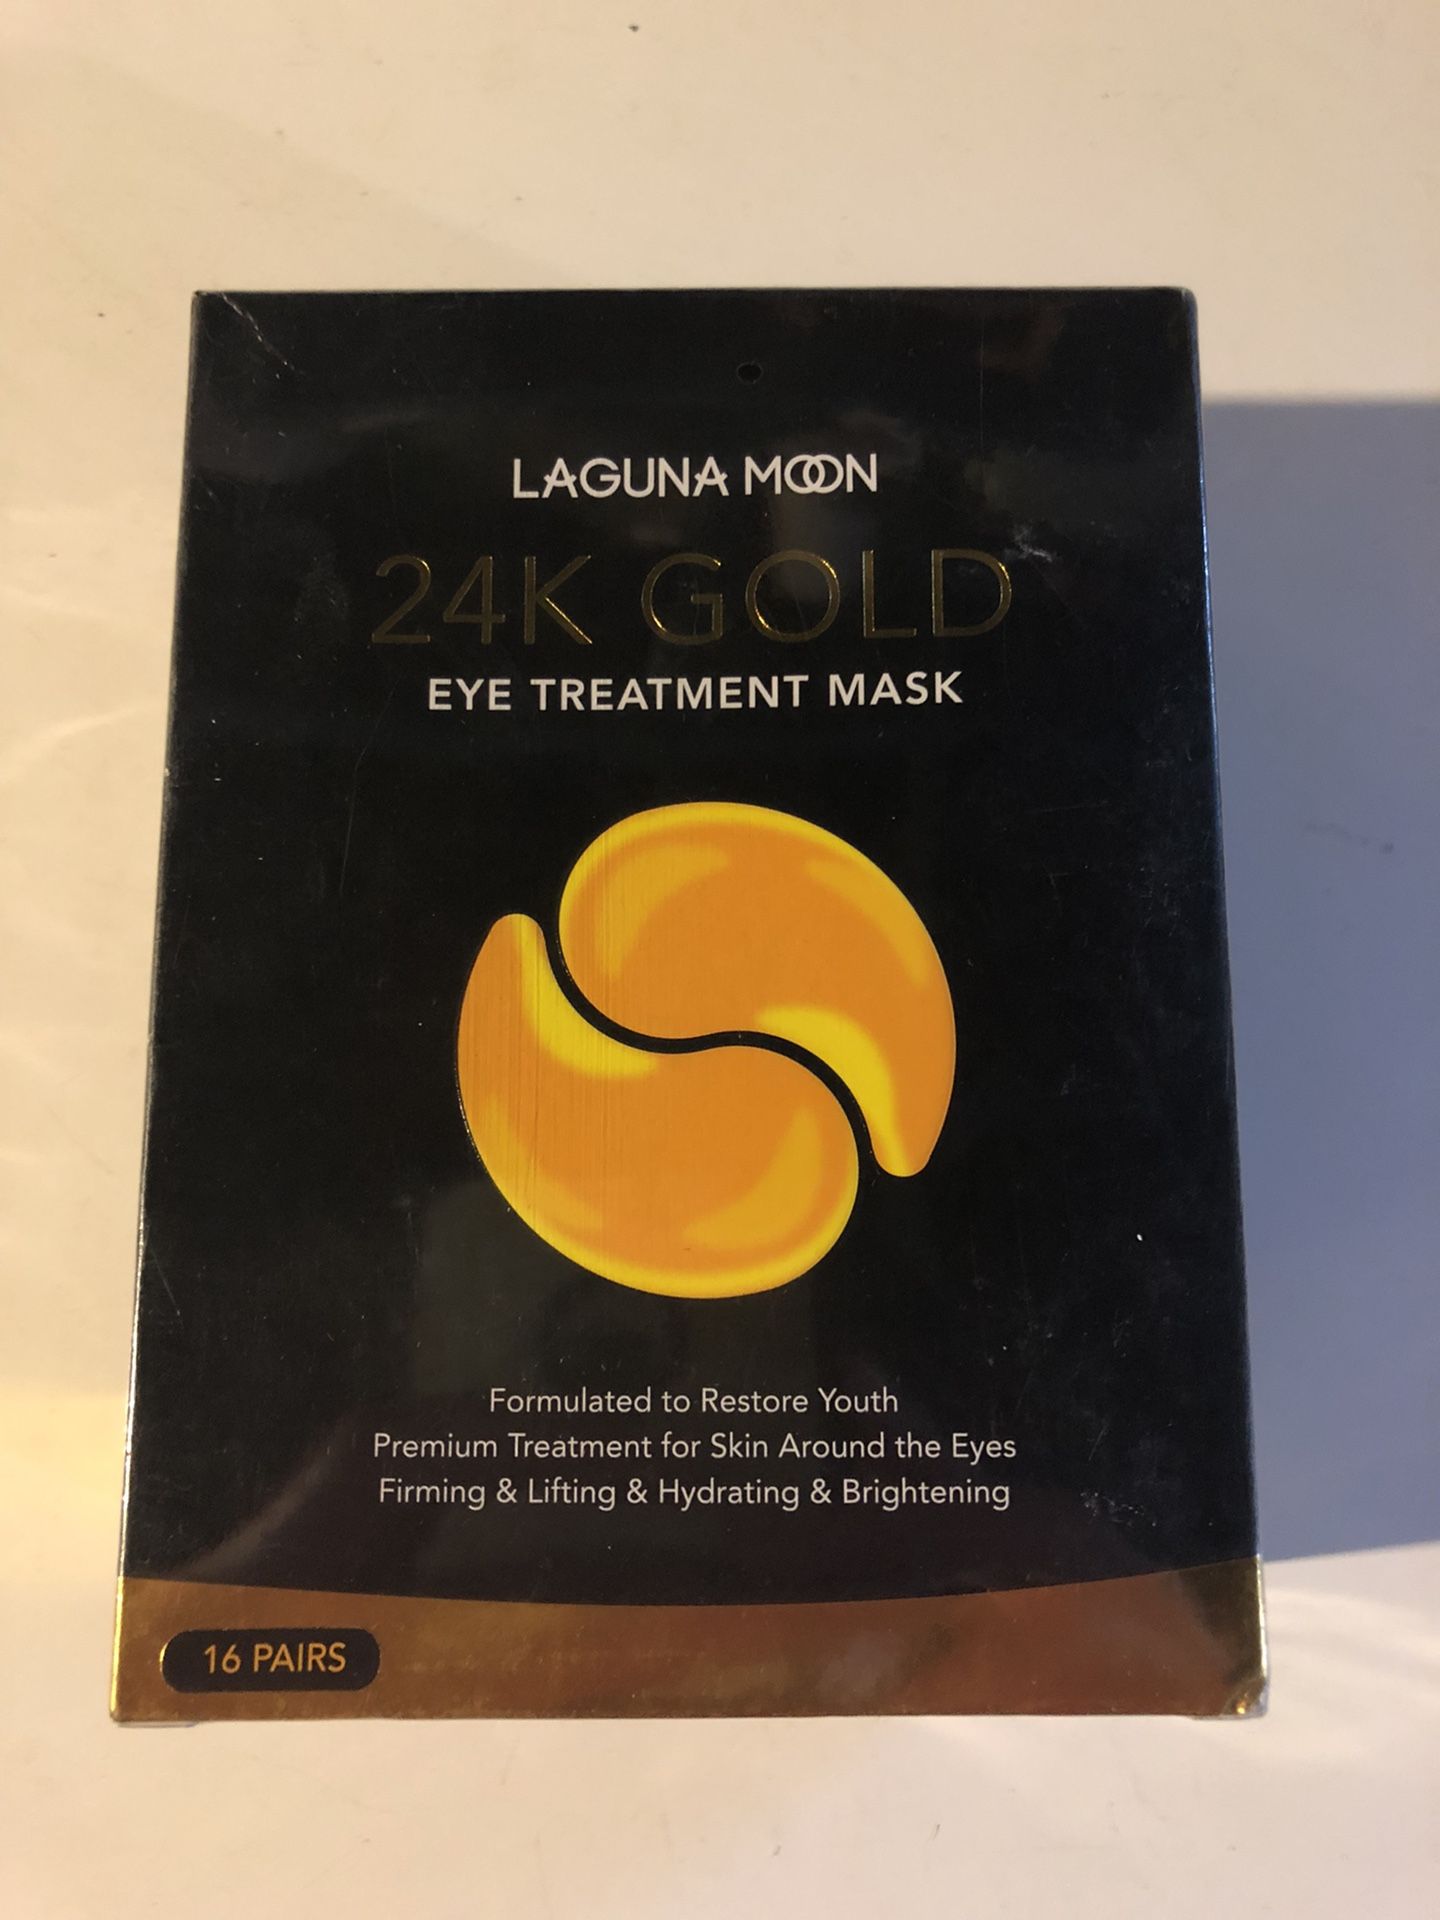 24K Gold Eye Treatment Mask